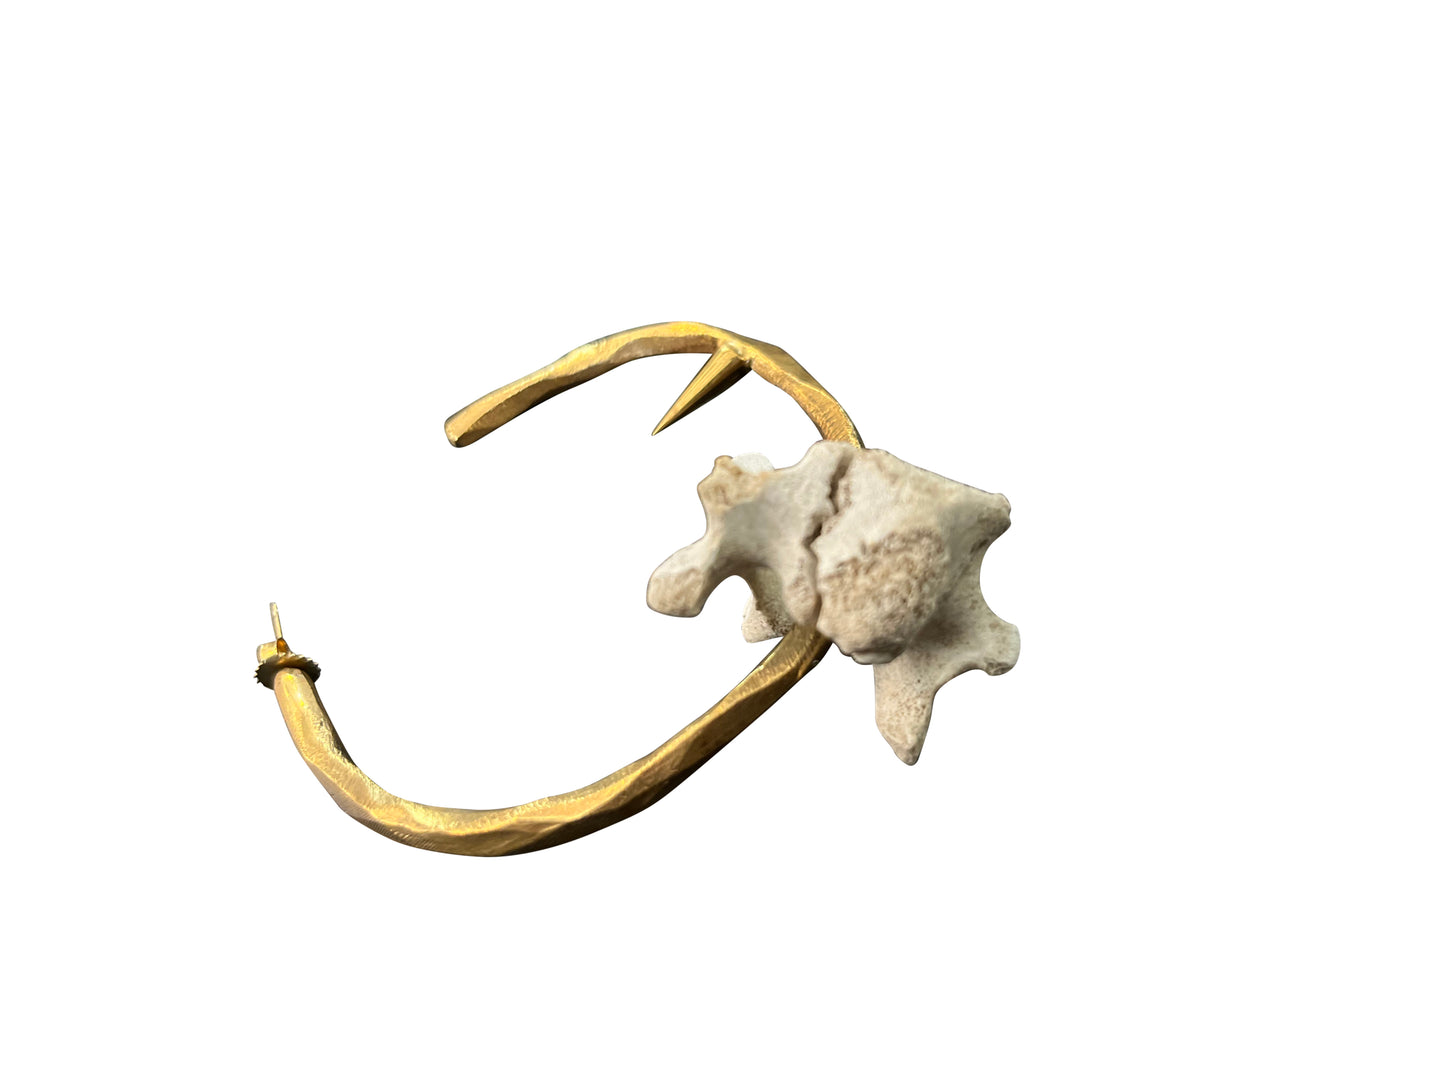 Brass Hoop Earring with Spike and Bone